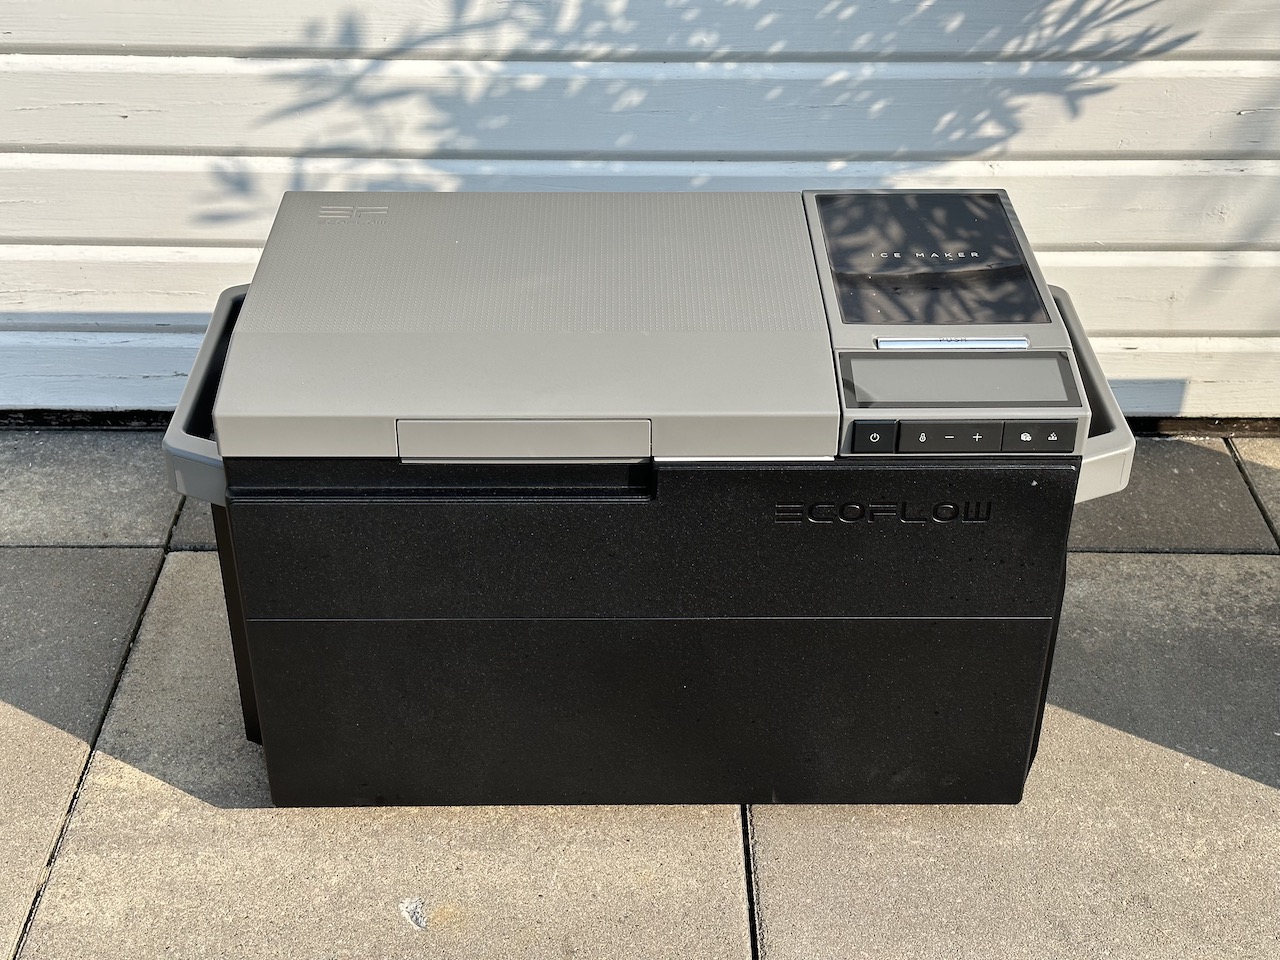 Kühlbox trifft Innovation: die neue mobile Tiefkühlbox EcoFlow GLACIER im  Test › Macerkopf